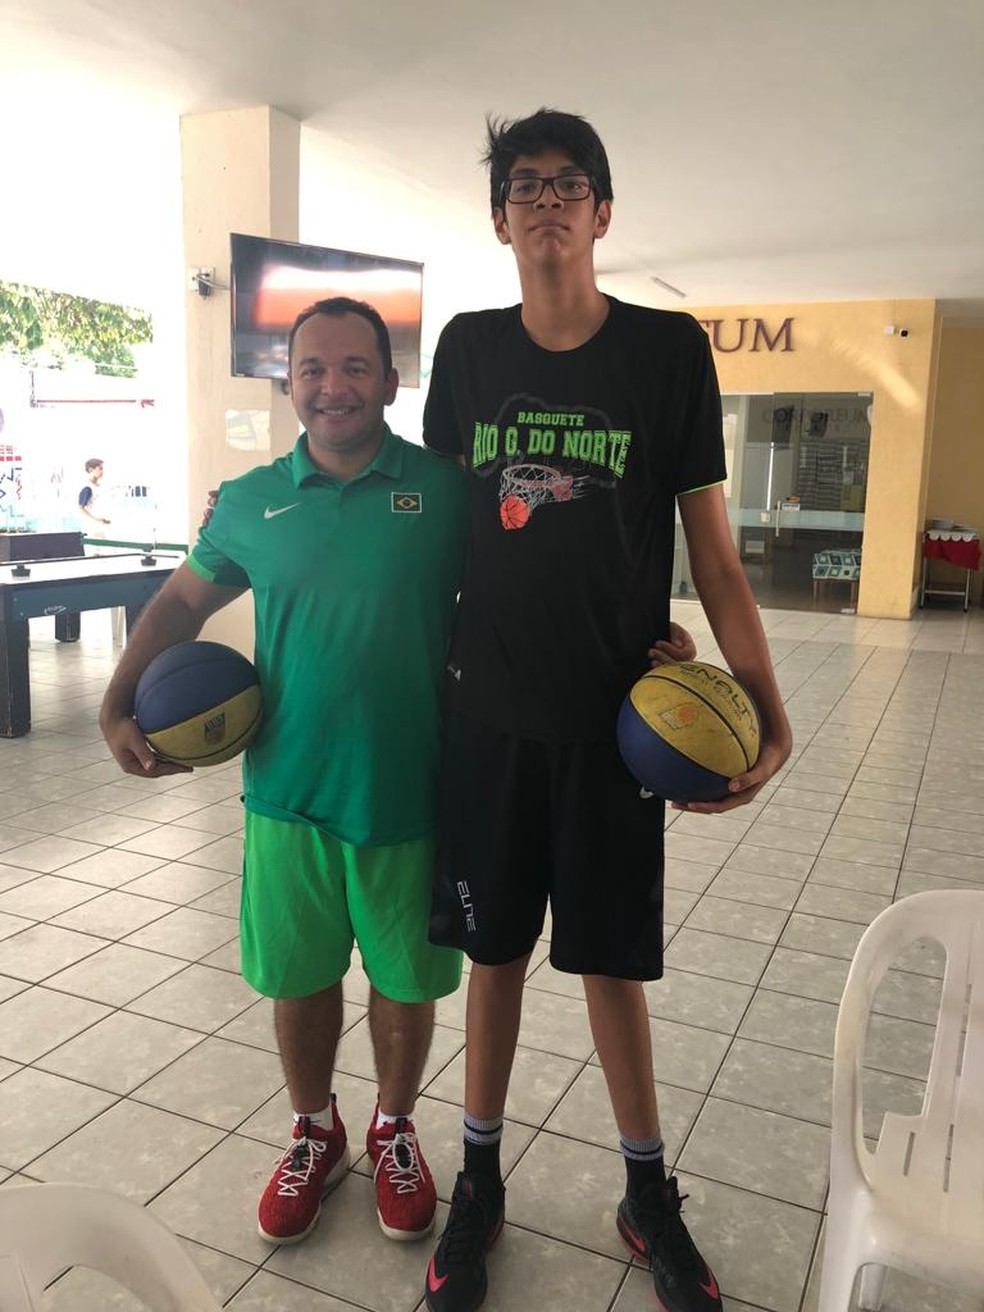 Jogadora brasileira de basquete conhece pai, ex-atleta da NBA, aos 25 anos  - 11/06/2021 - UOL Esporte